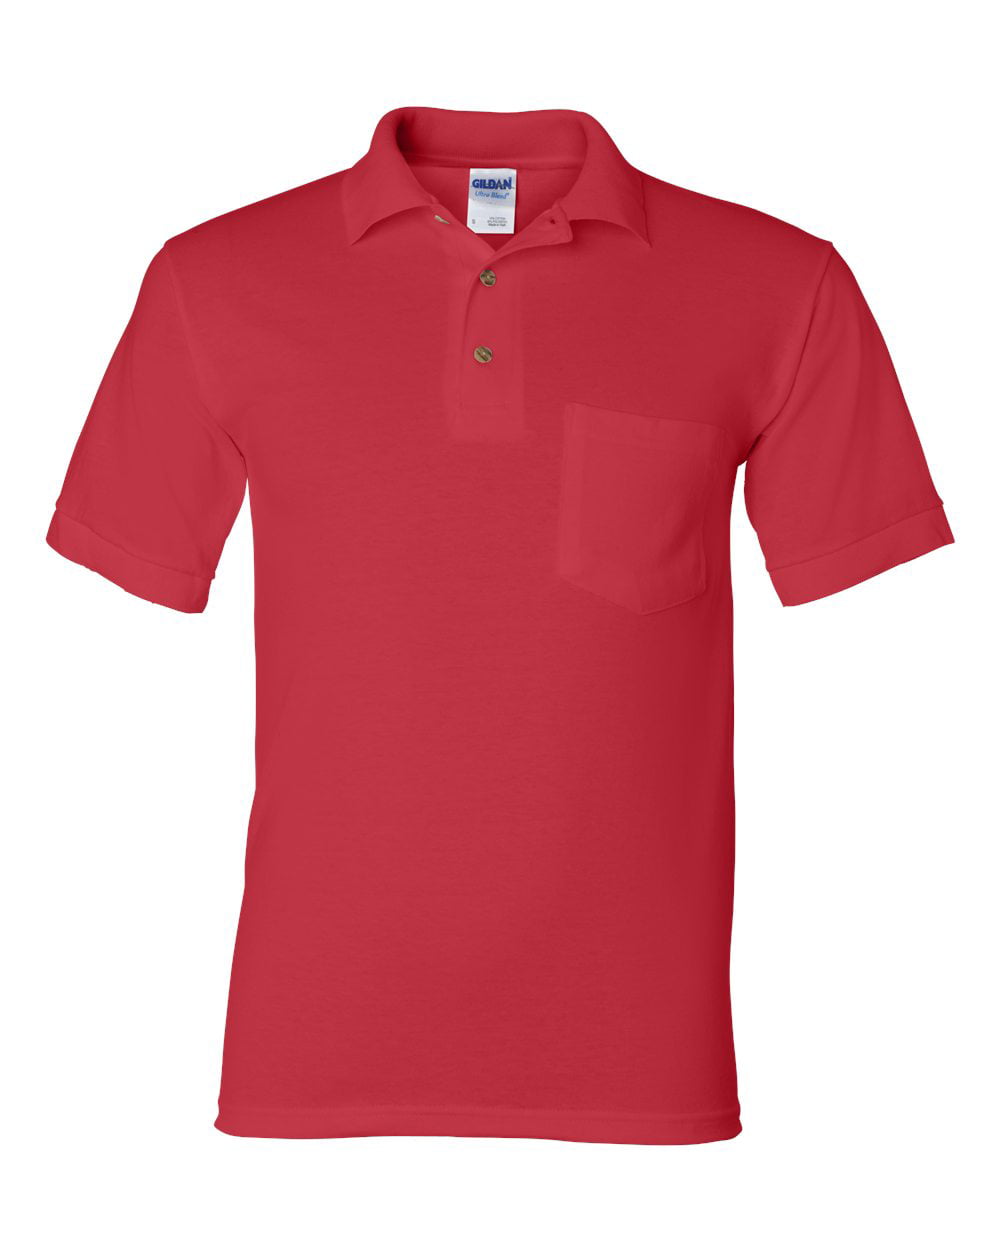 Details about   Gildan Mens Short Sleeve DryBlend Jersey Sport Shirt with Pocket 8900 up to 5XL 